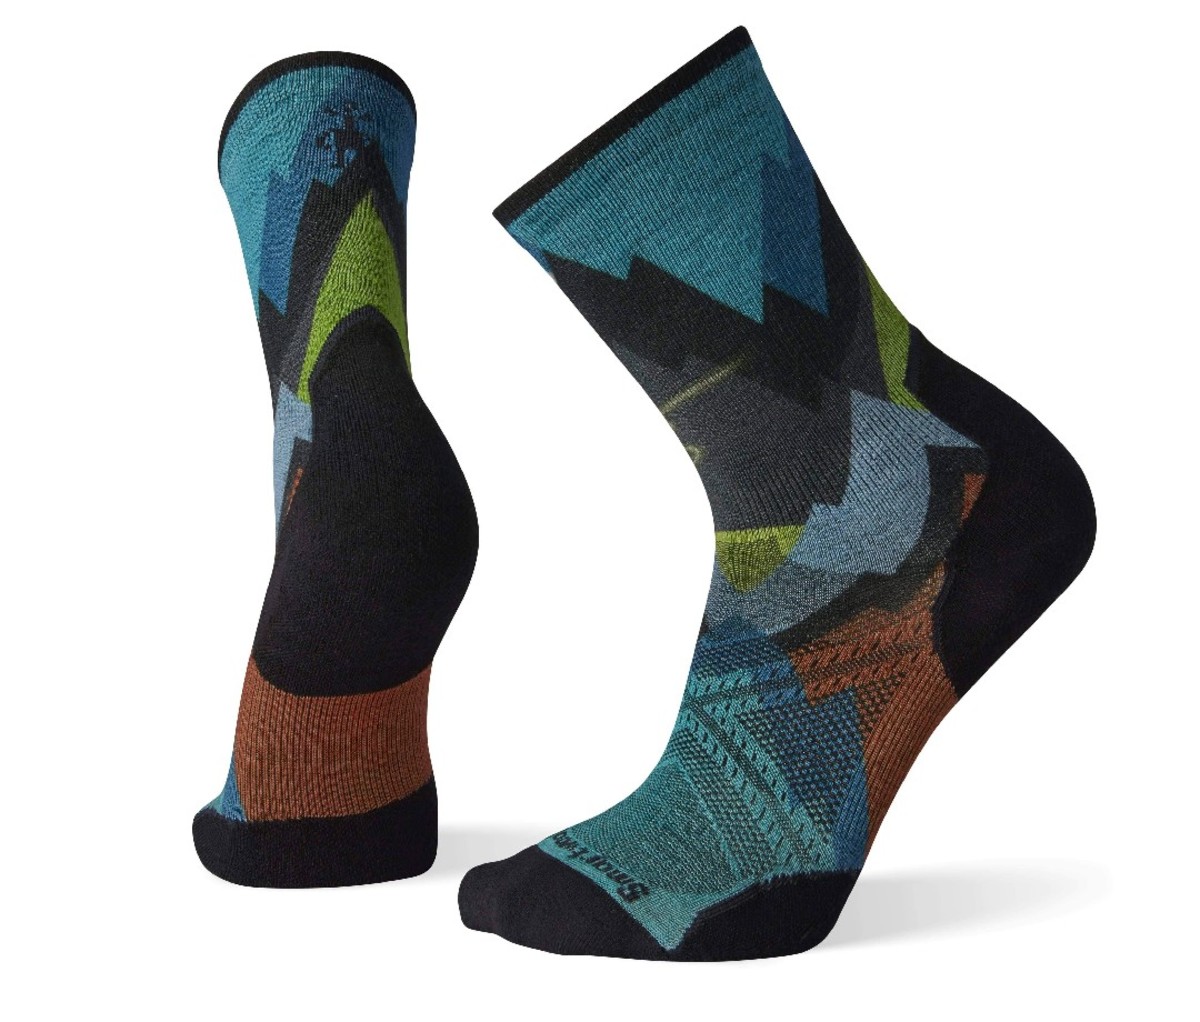 Black and dark-blue based pair of Smartwool Athlete Edition Run Mountain Print Crew Socks